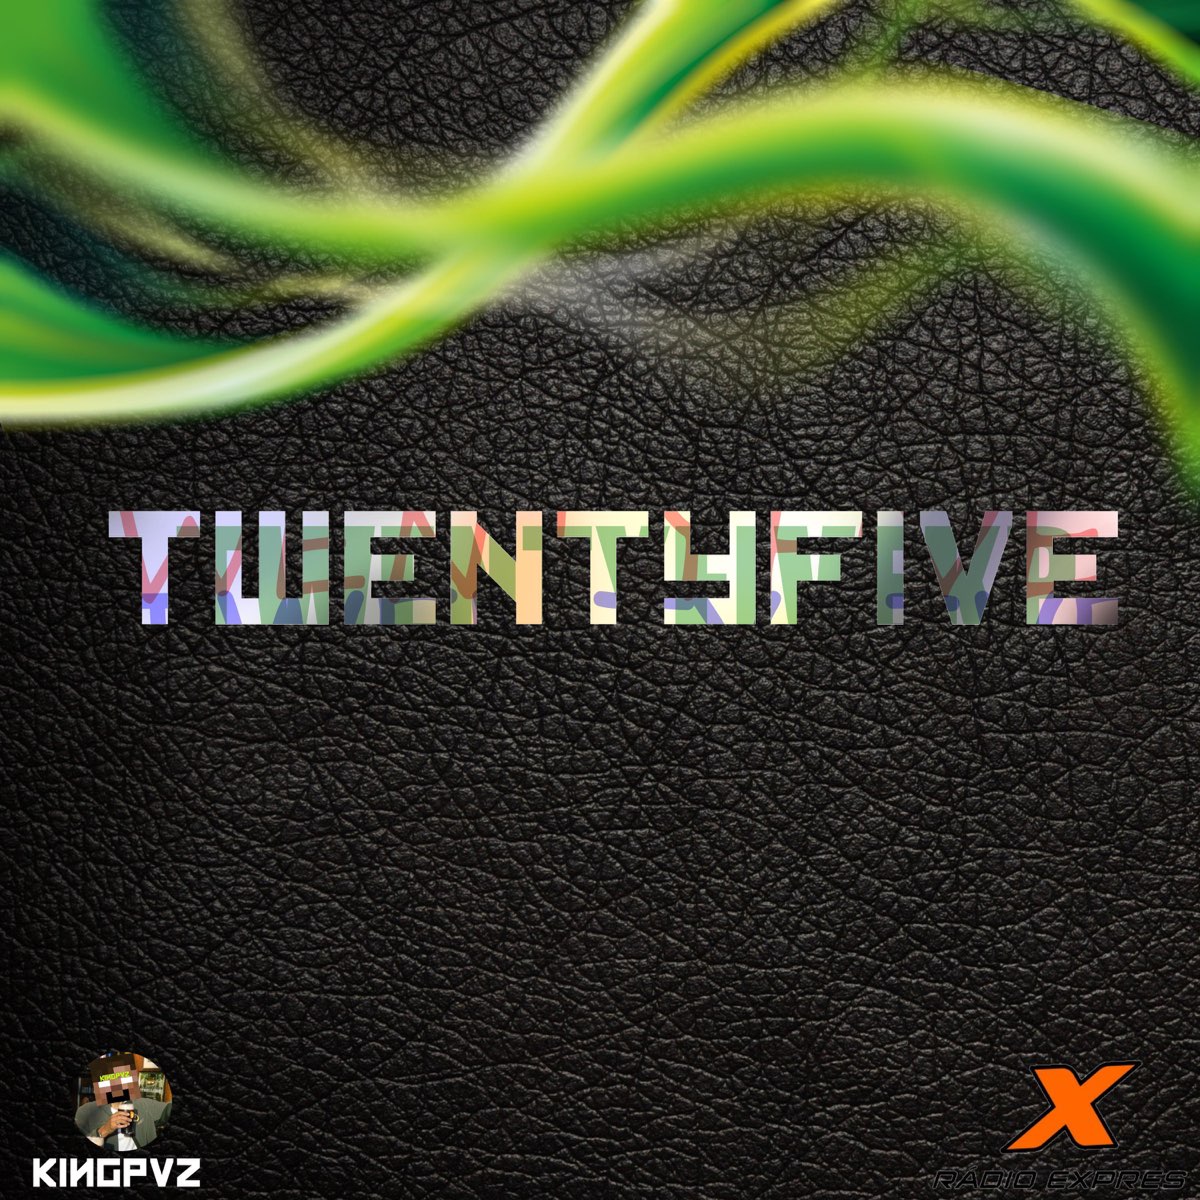 Twentyfive (feat. Rádio Expres) - Single - Album by Kingpvz - Apple Music